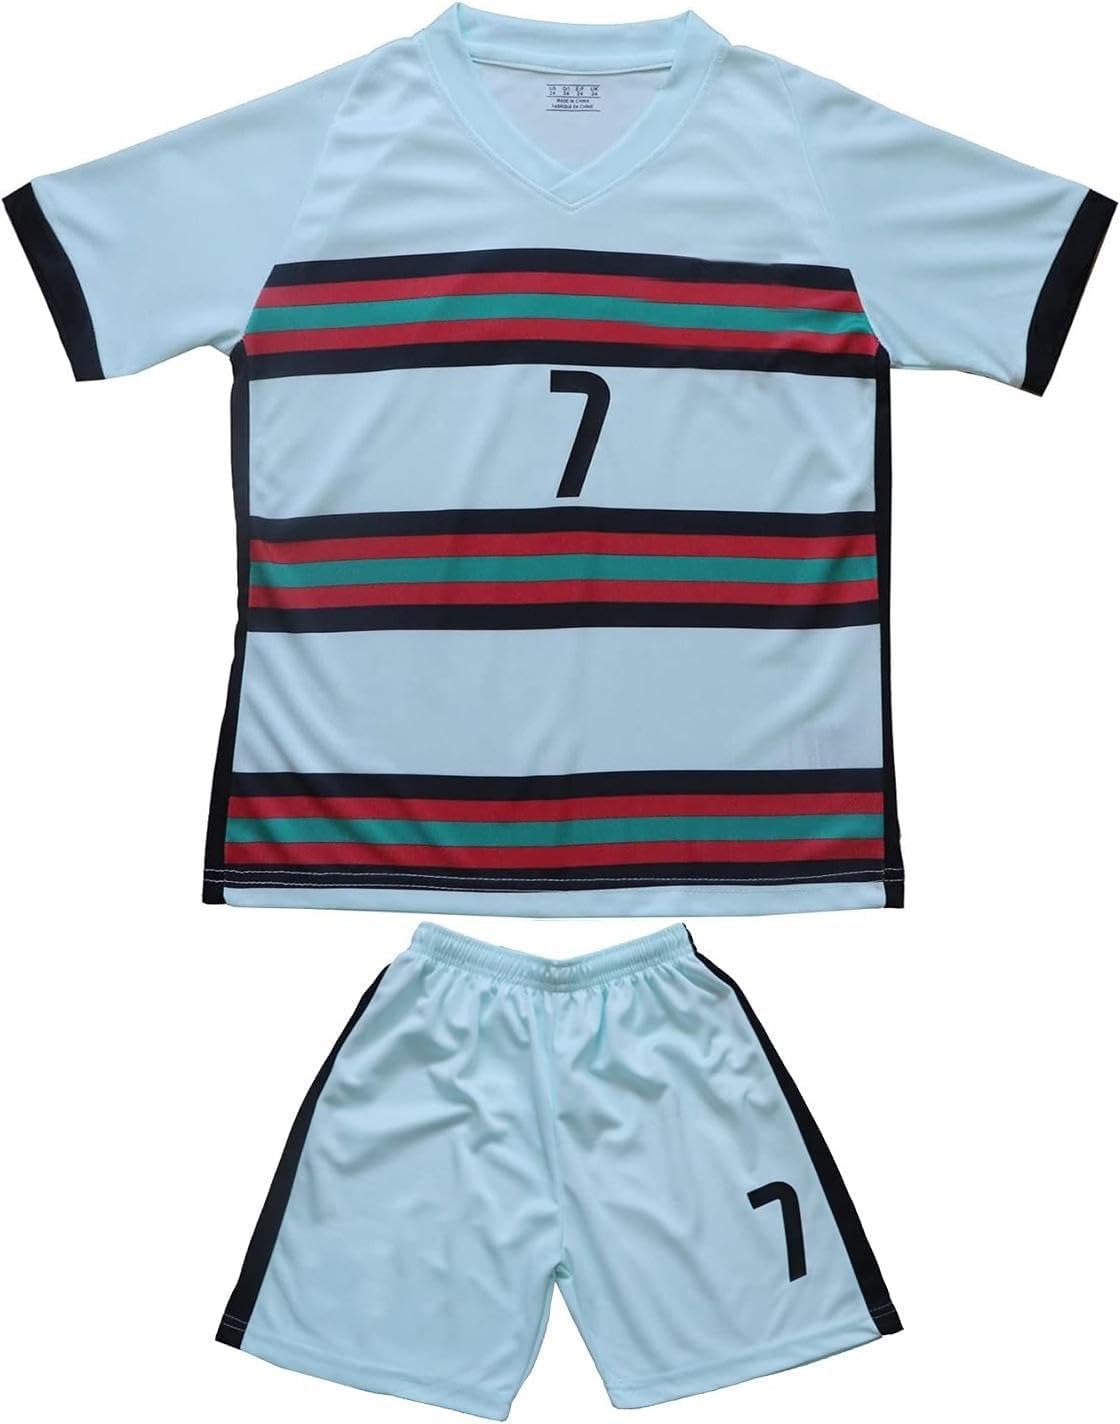 FPF #7 Ronaldo Kids Football Soccer Jersey/Shorts/Socks Kit Youth Sizes (Ronaldo Green, 24 (6-7 Years))